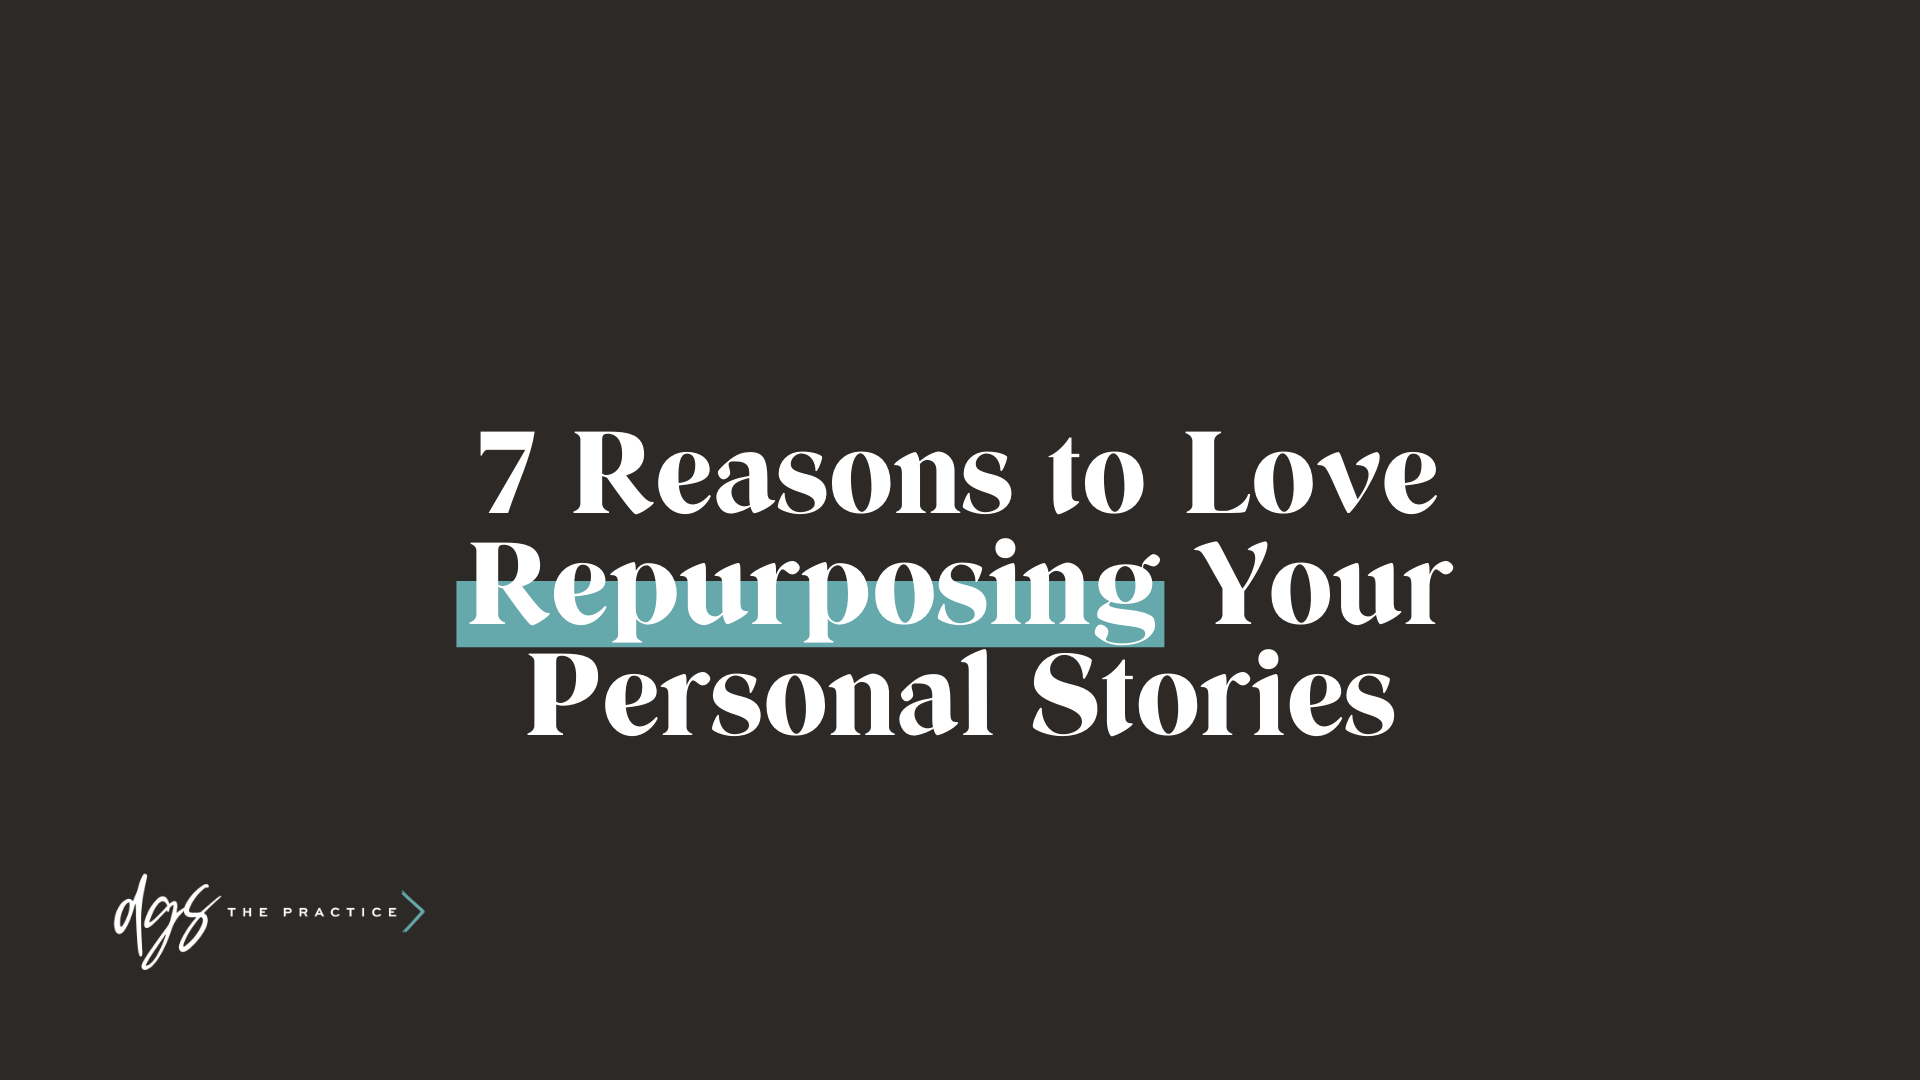 7 Reasons to Love Repurposing Your Personal Stories